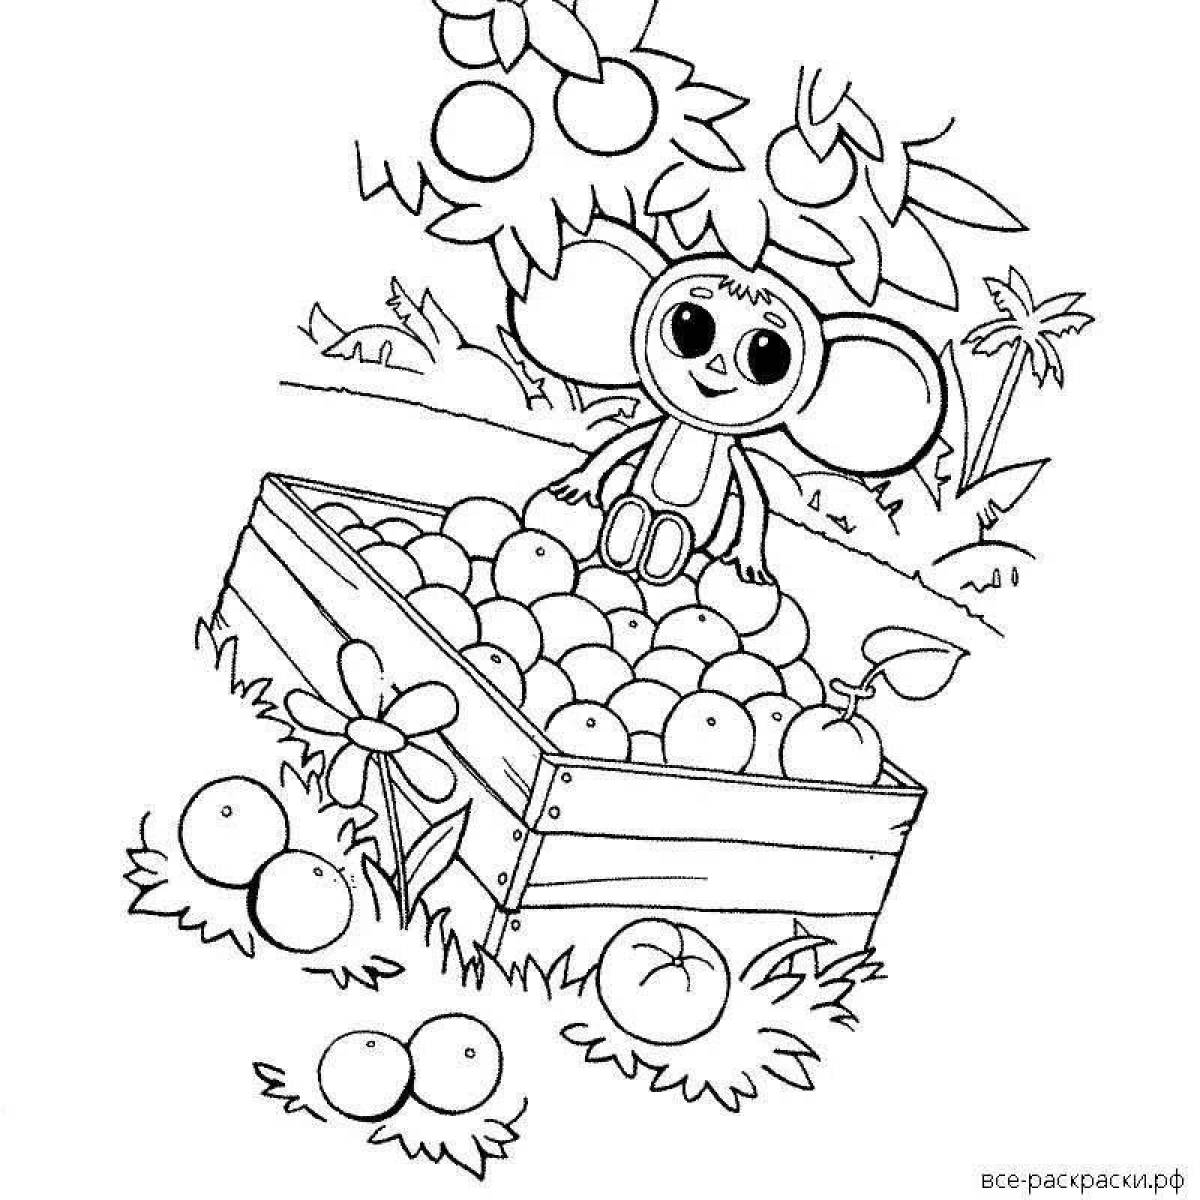 Playful drawing of cheburashka